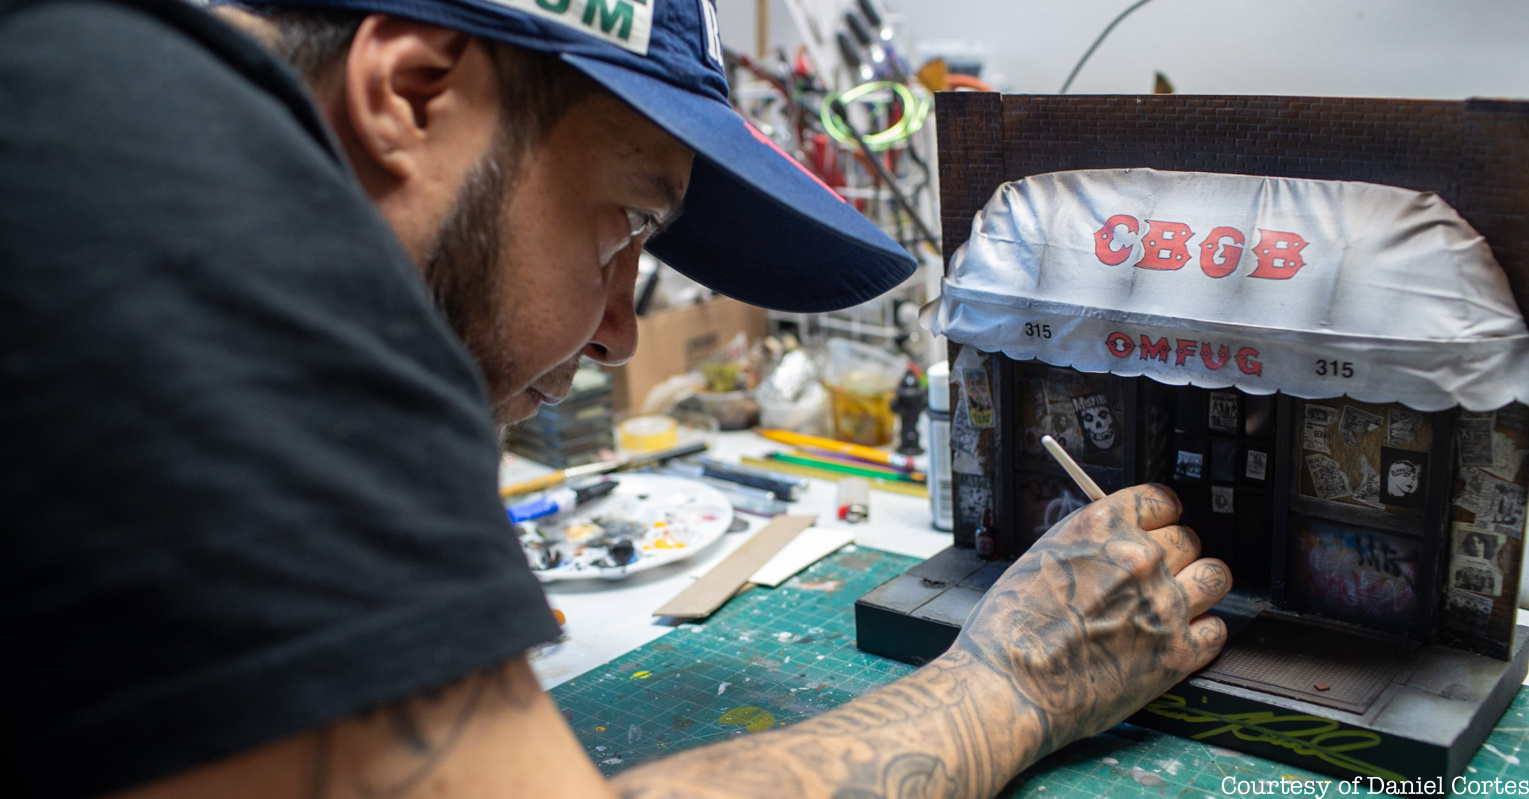 Daniel Cortes painting a miniature version of CBGB